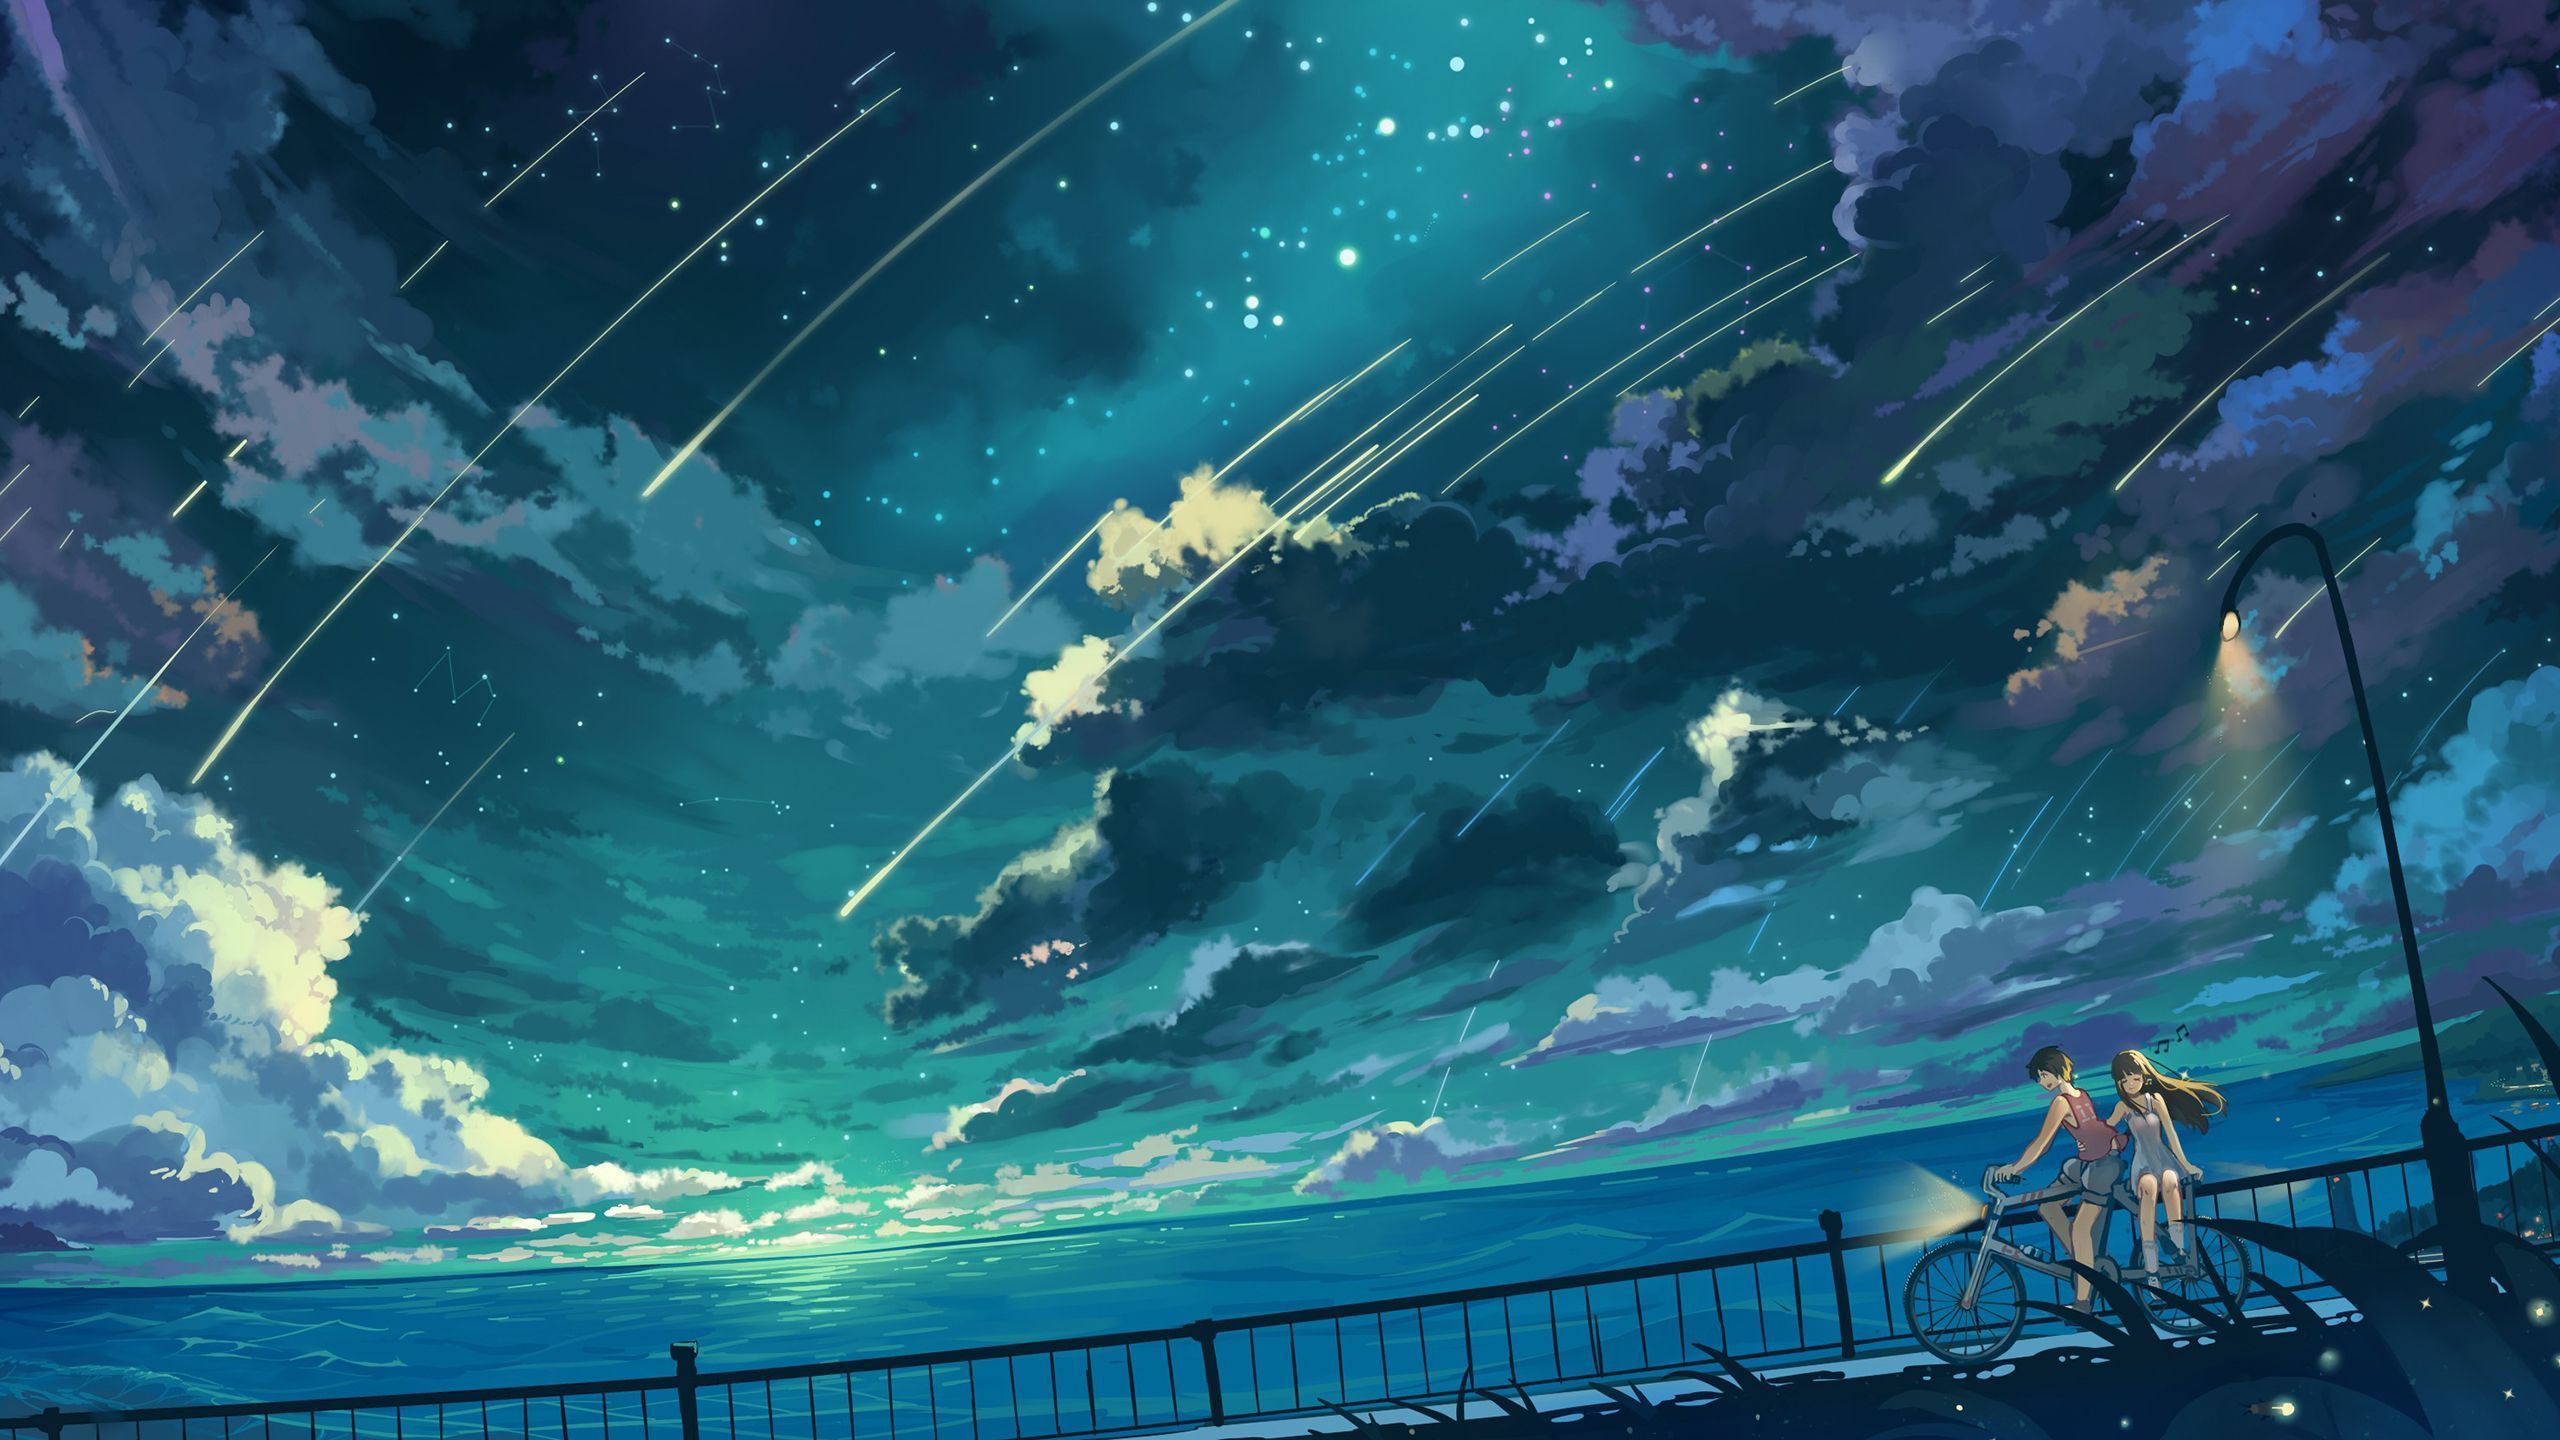 Relax Anime wallpaper ideas. anime wallpaper, anime scenery, anime scenery wallpaper